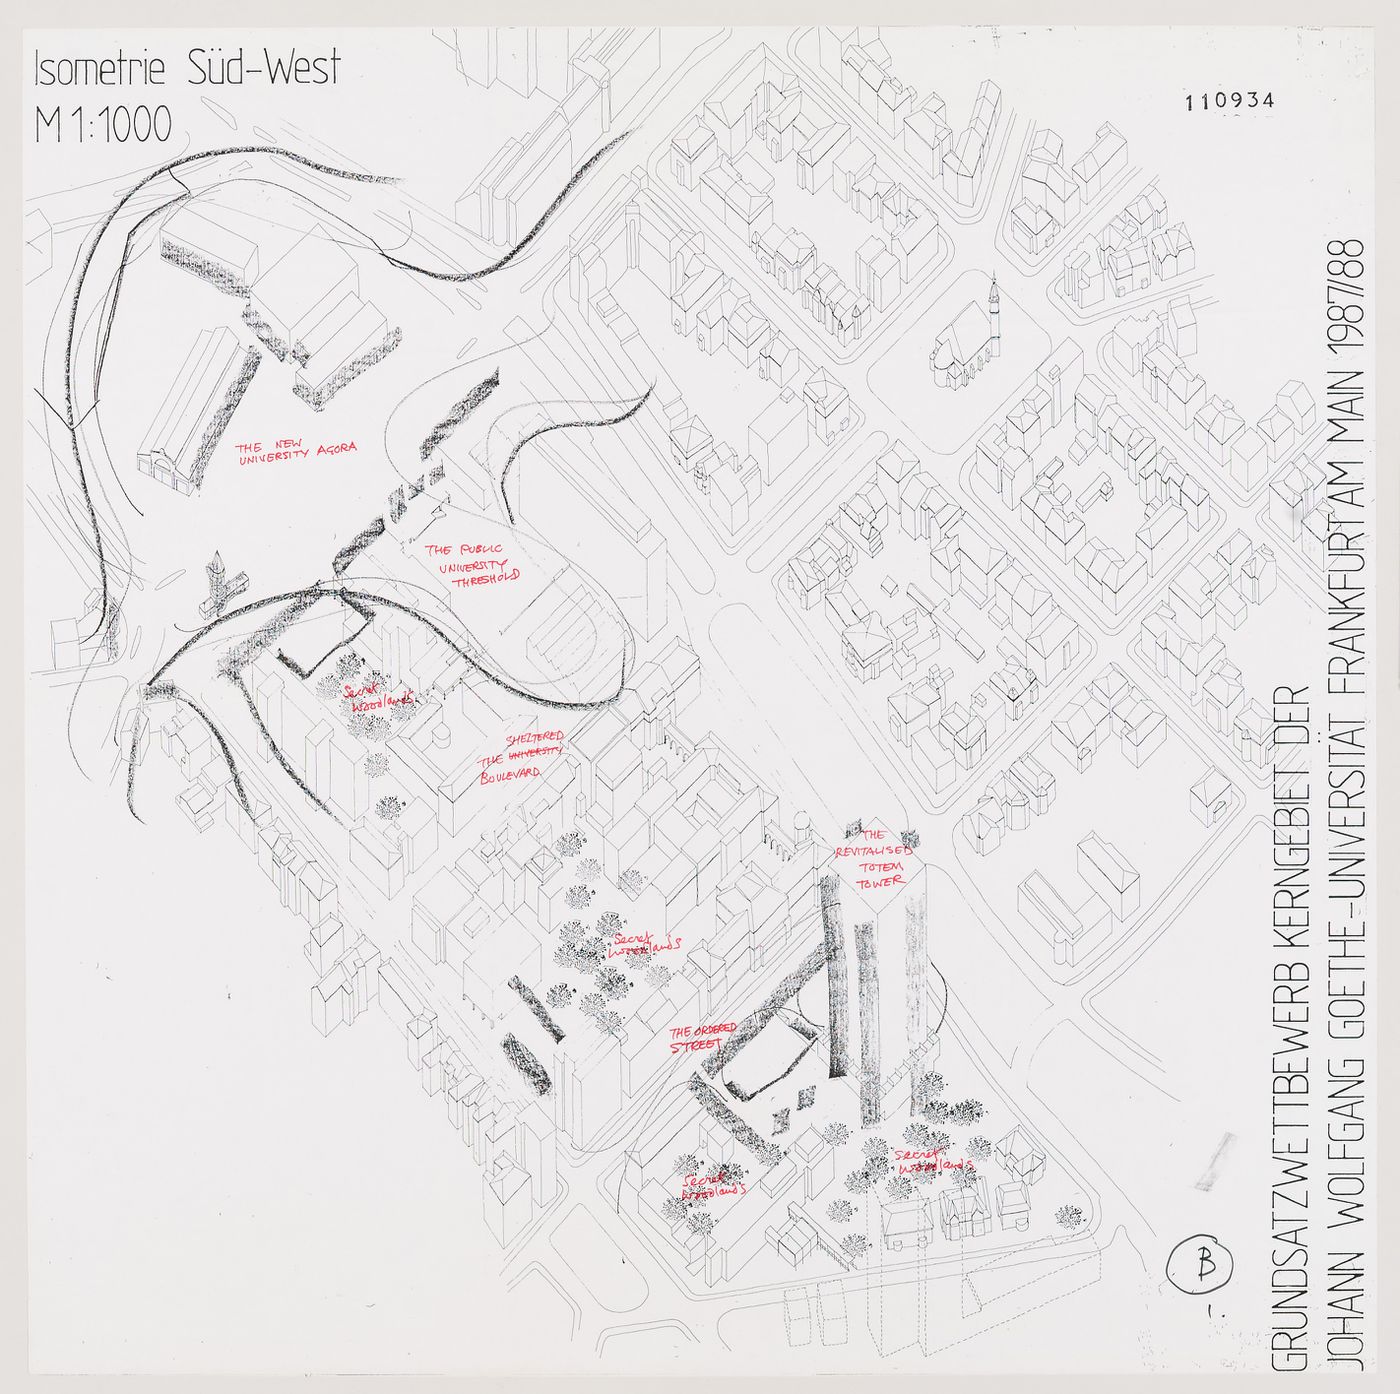 Frankfurt: isometric sketch of proposed campus plan